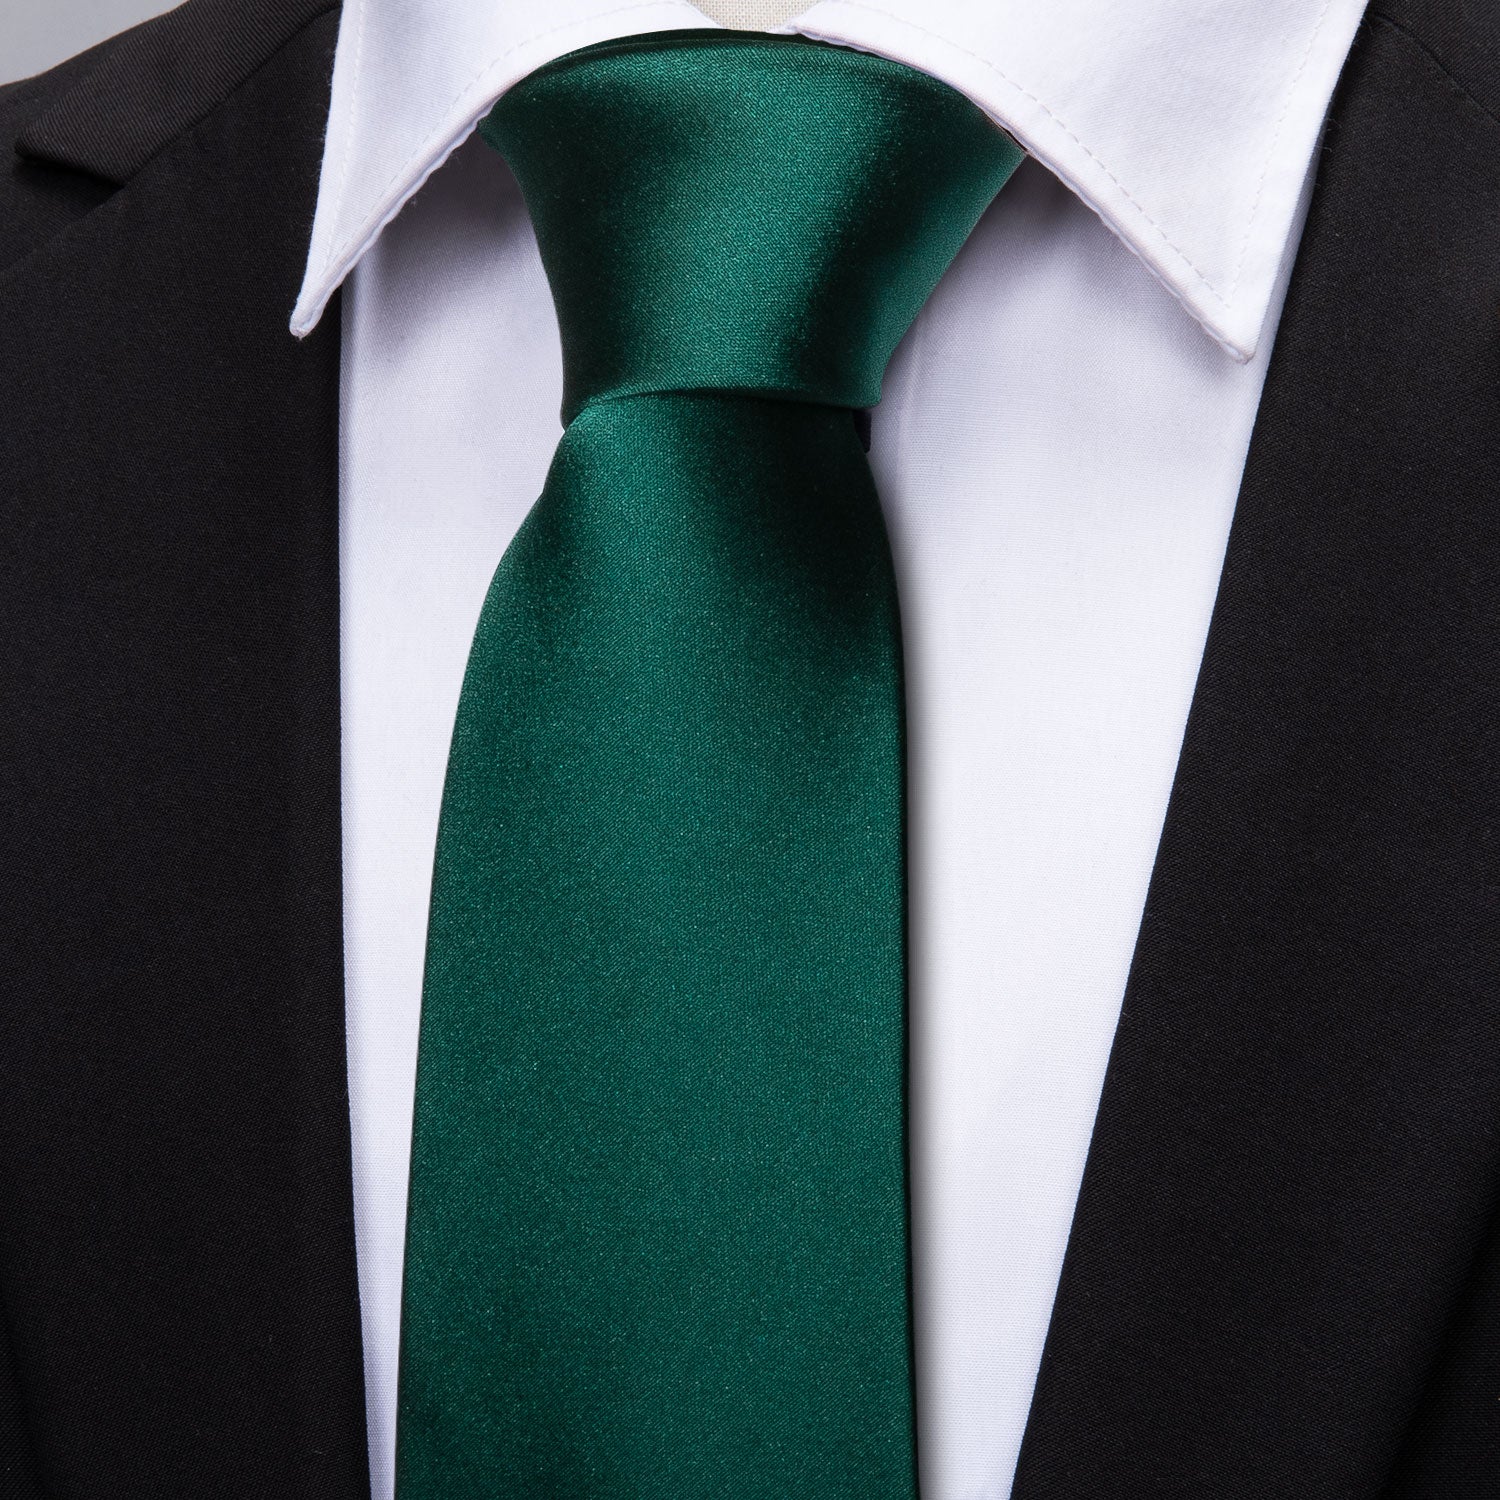 Barry.wang Green Tie Silk Men's Tie Pocket Square Cufflinks Set